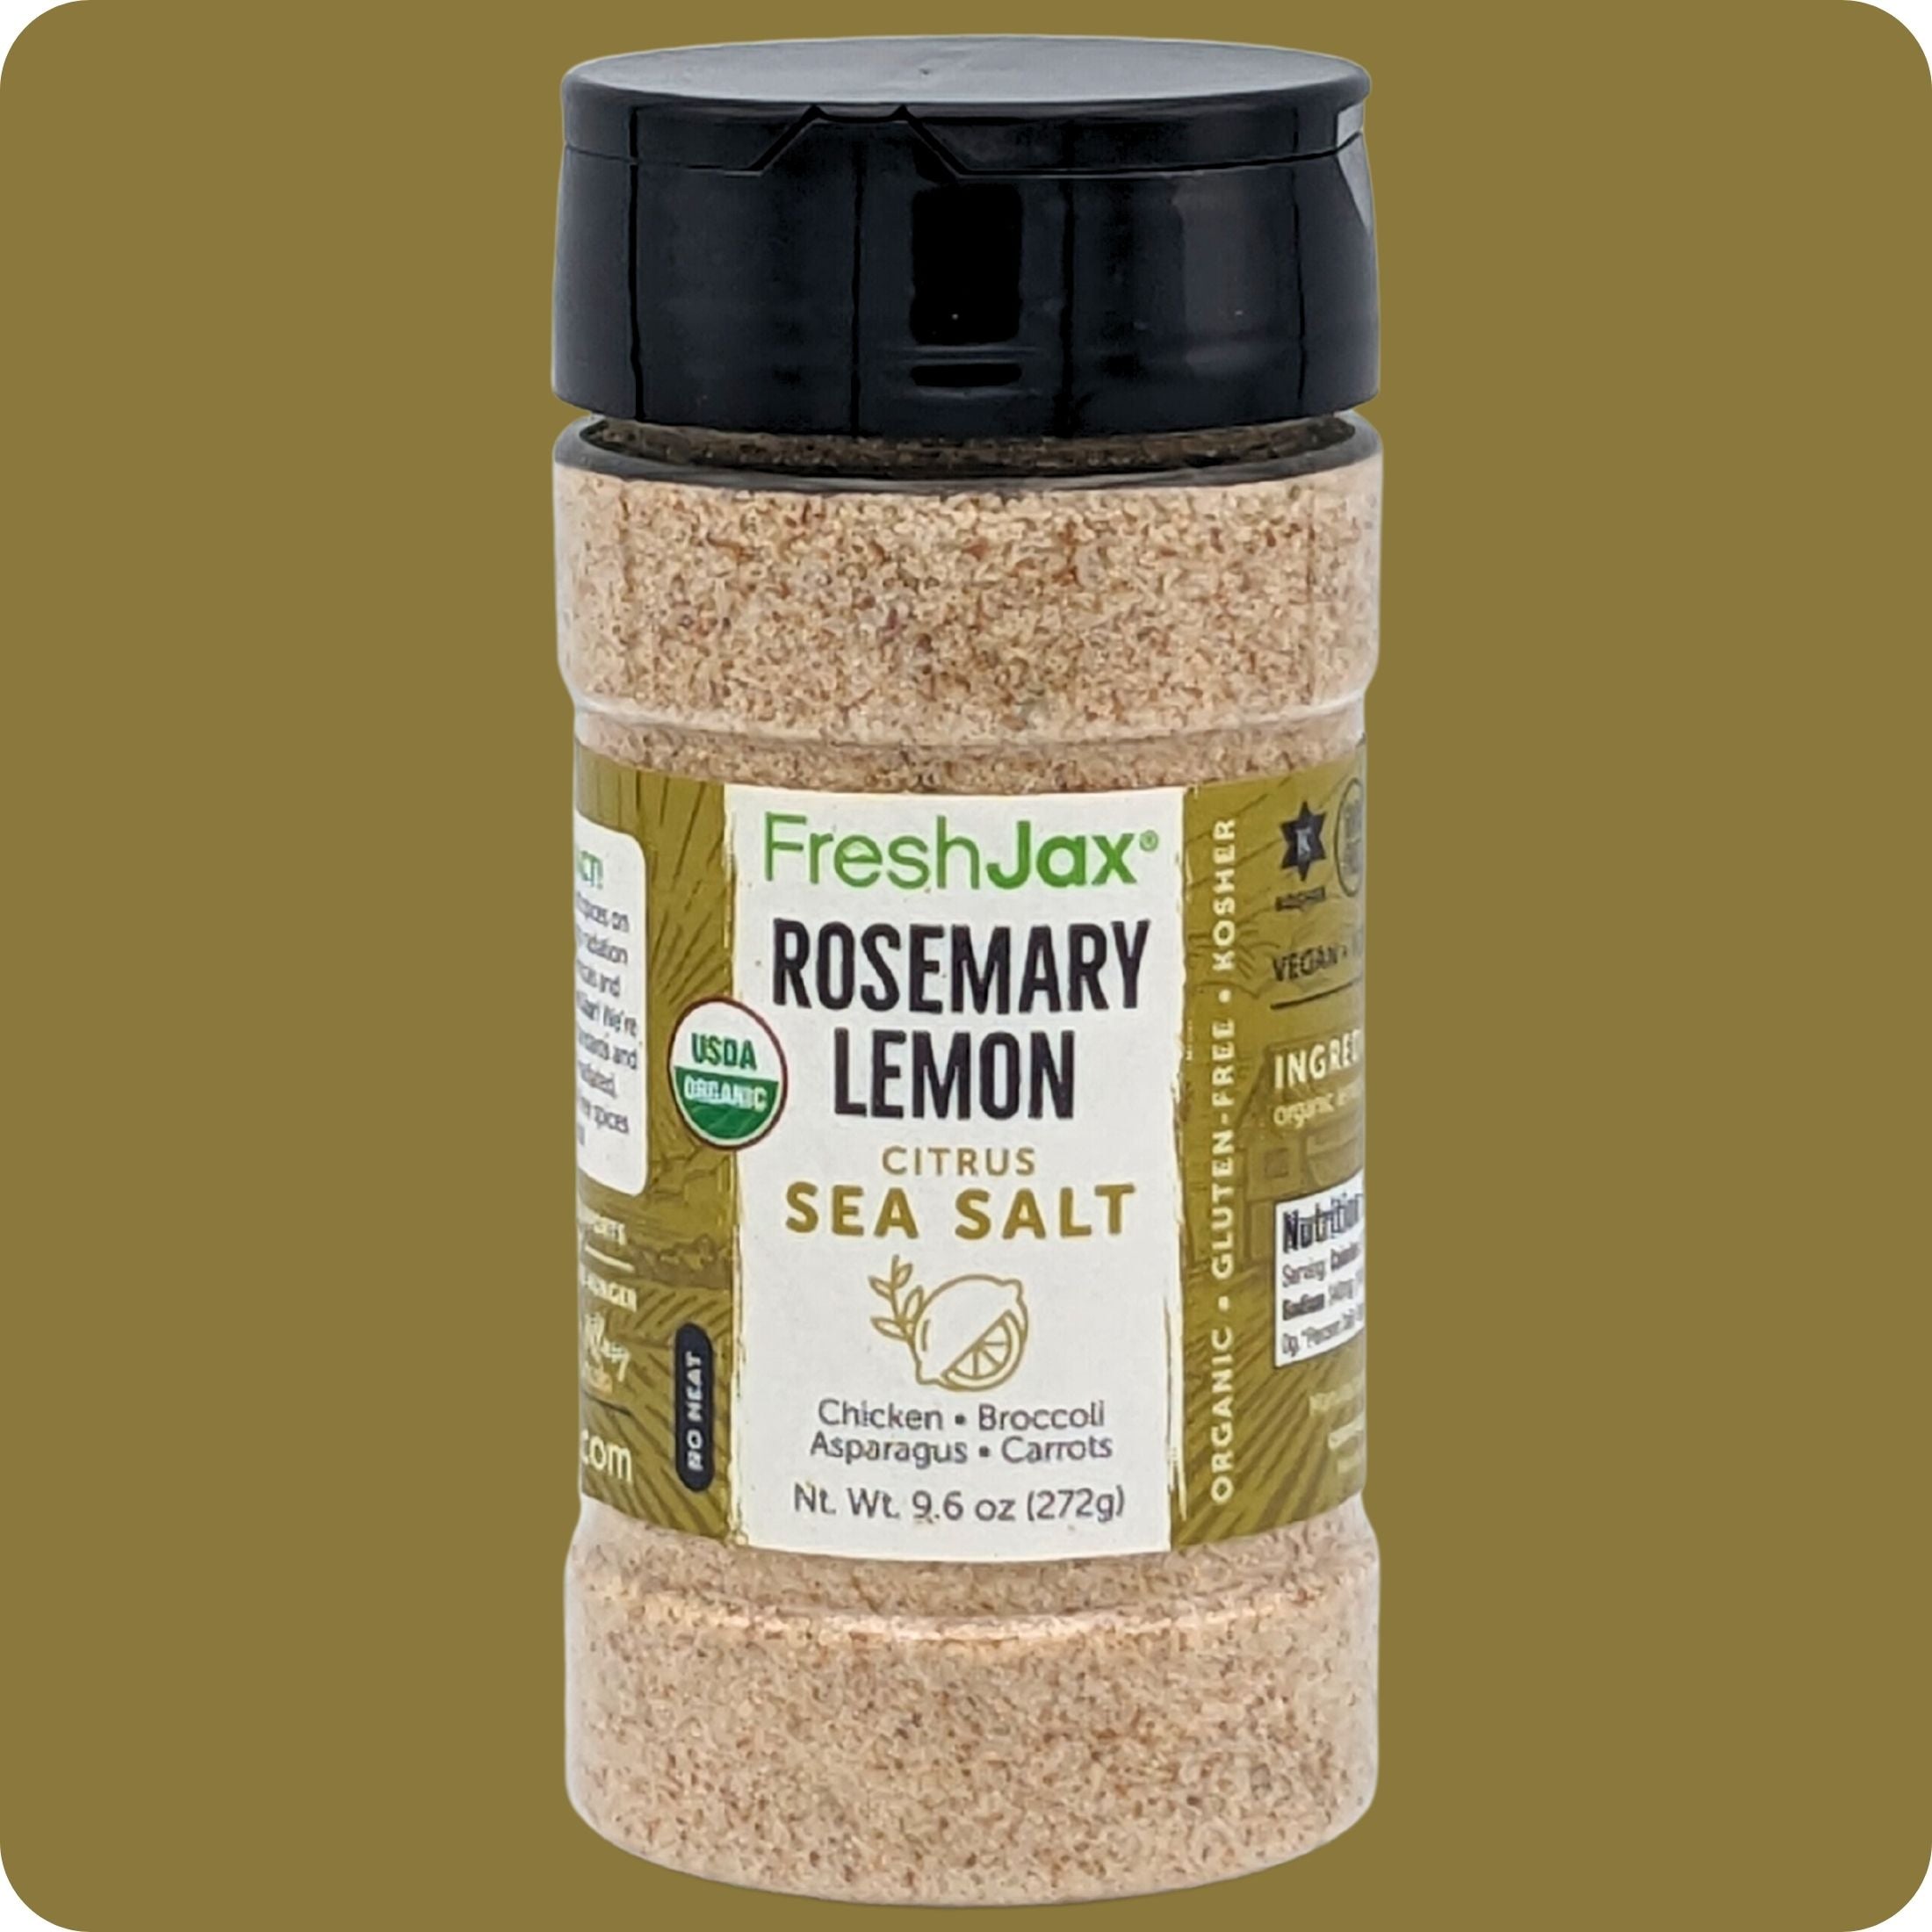 FreshJax Organic Spices Rosemary Lemon Citrus Sea Salt